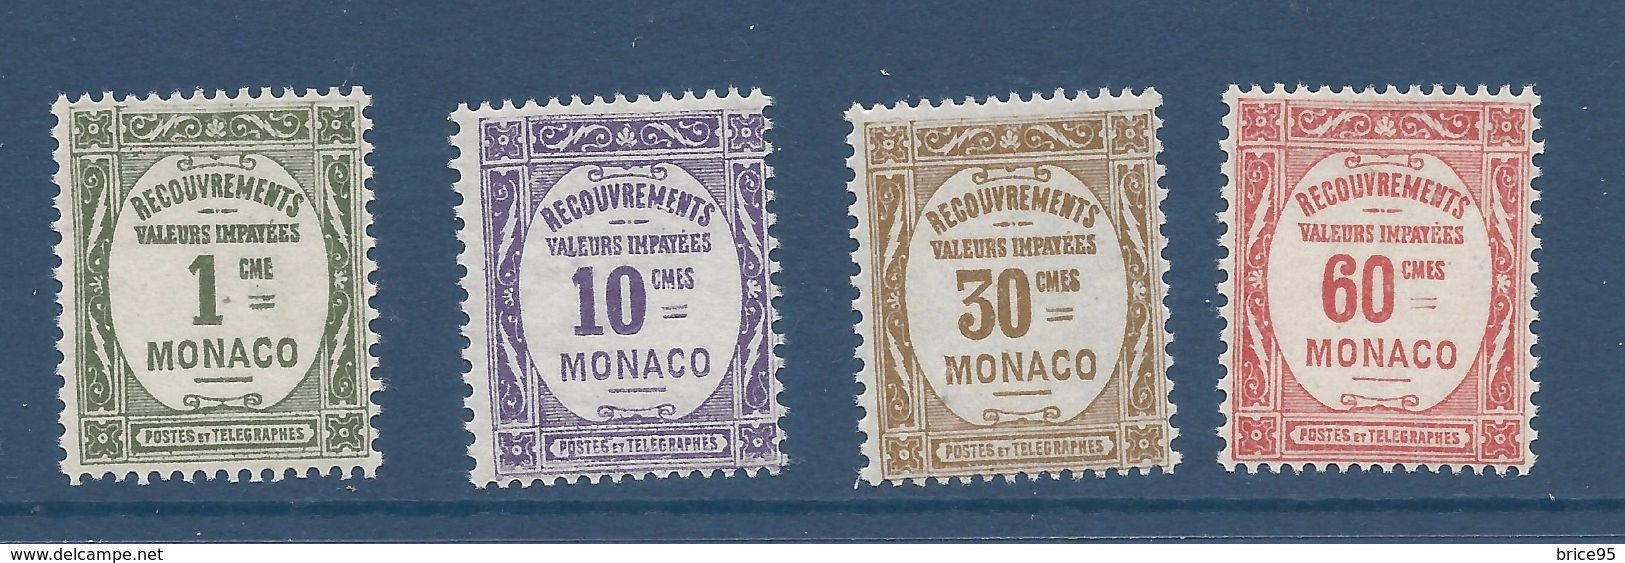 Monaco Taxe - YT N° 13 à 16 * - Neuf Avec Charnière - 1924 à 1932 - Ongebruikt